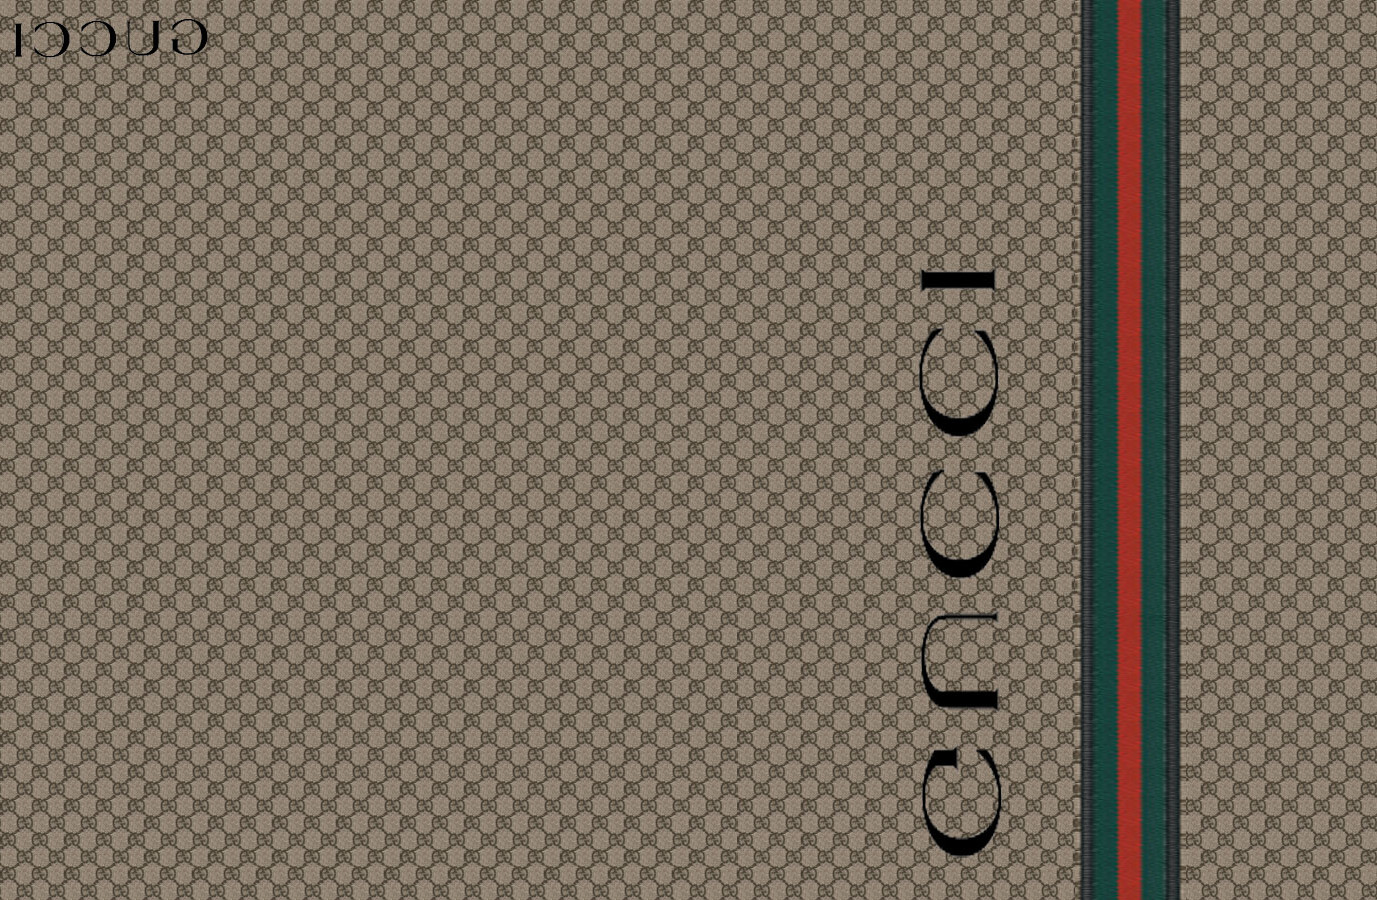 Gucci Logo Wallpaper Aecfashion